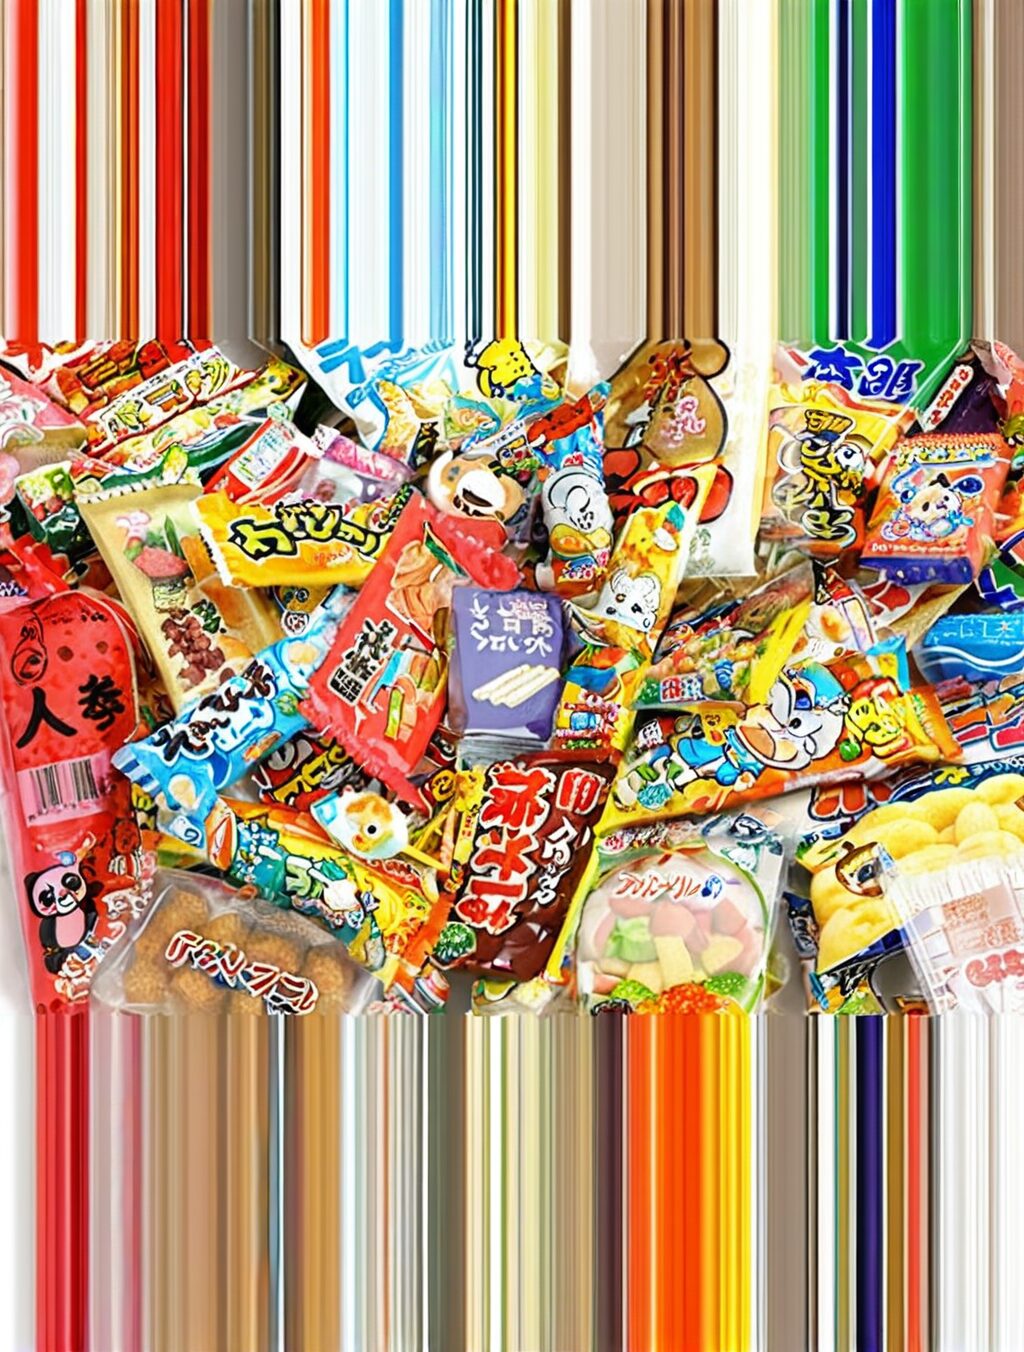 japanese junk food snacks